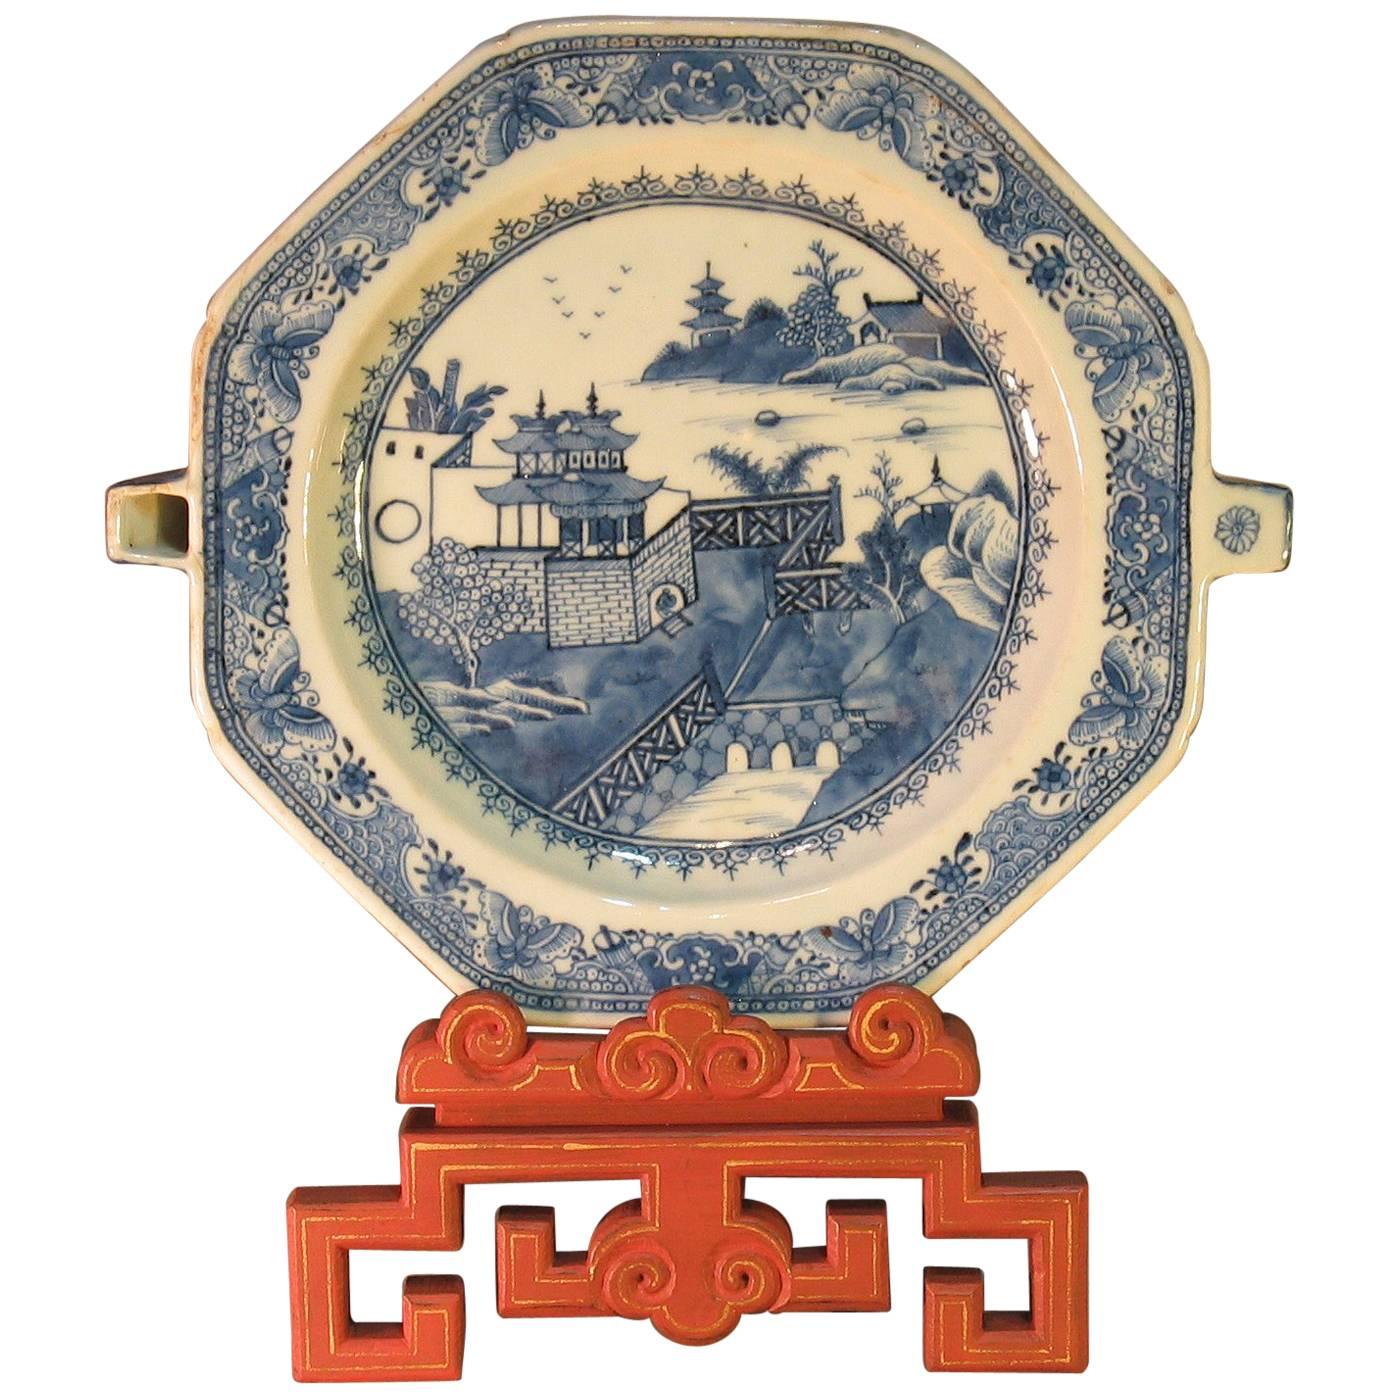 Chinese Export Octagonal Warming Platter in Underglaze Blue "Fitzhugh" Pattern